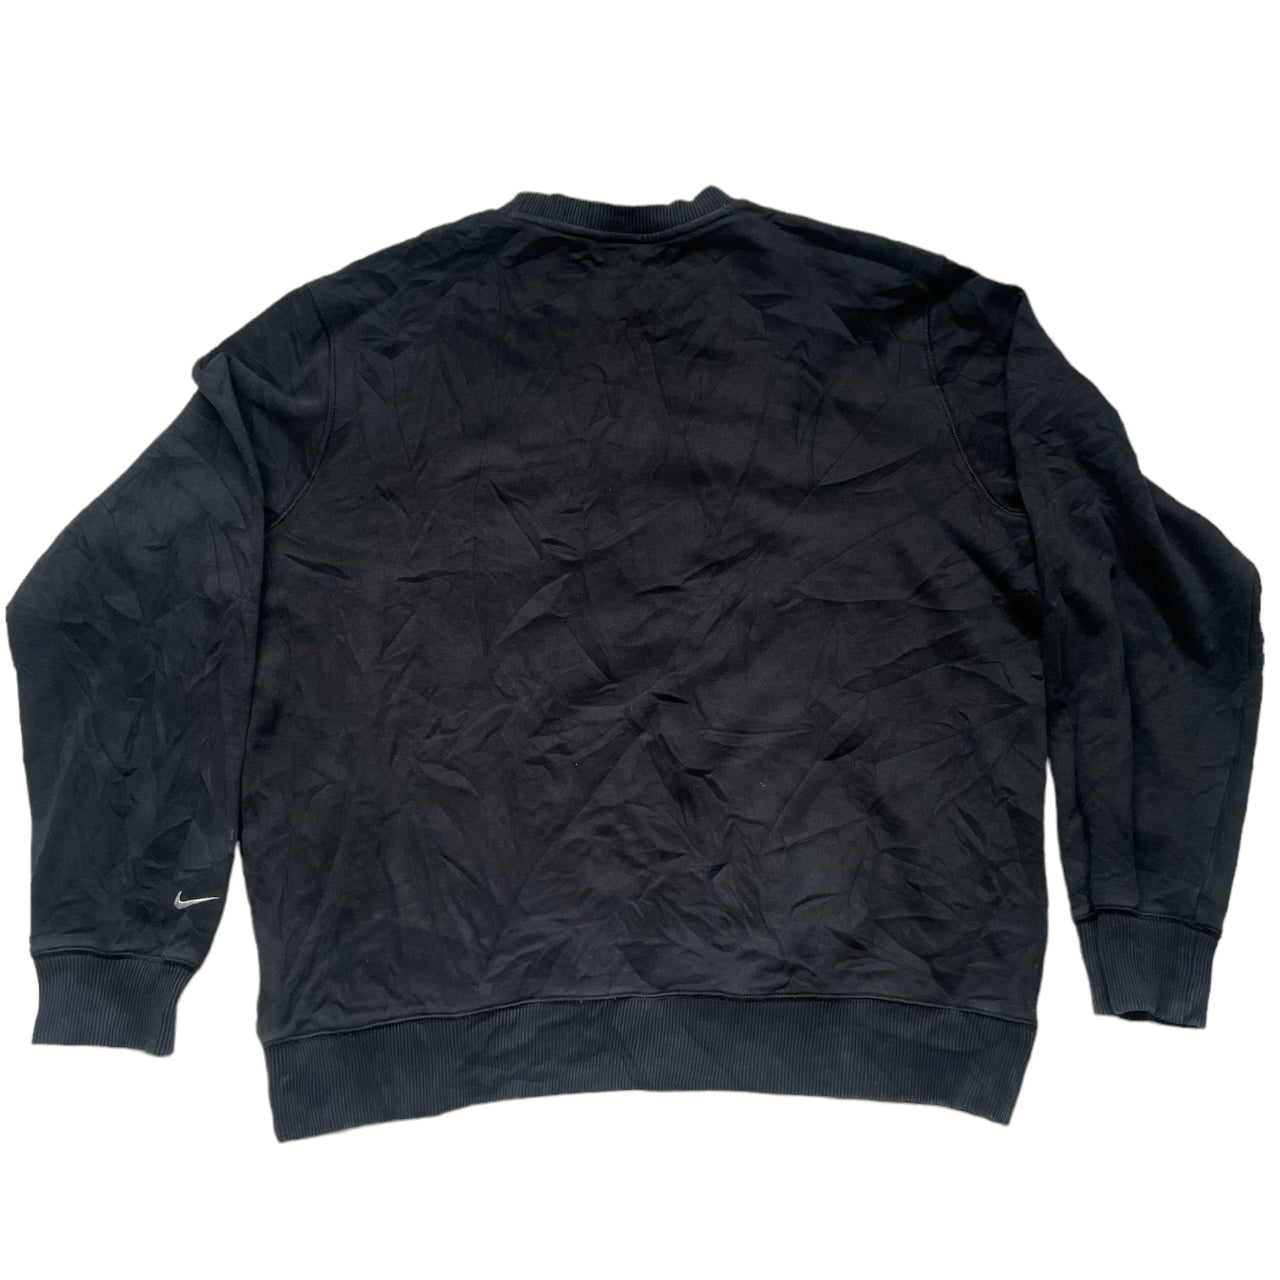 Nike Vintage Sweatshirt Big Logo Retro L Size Black A_32